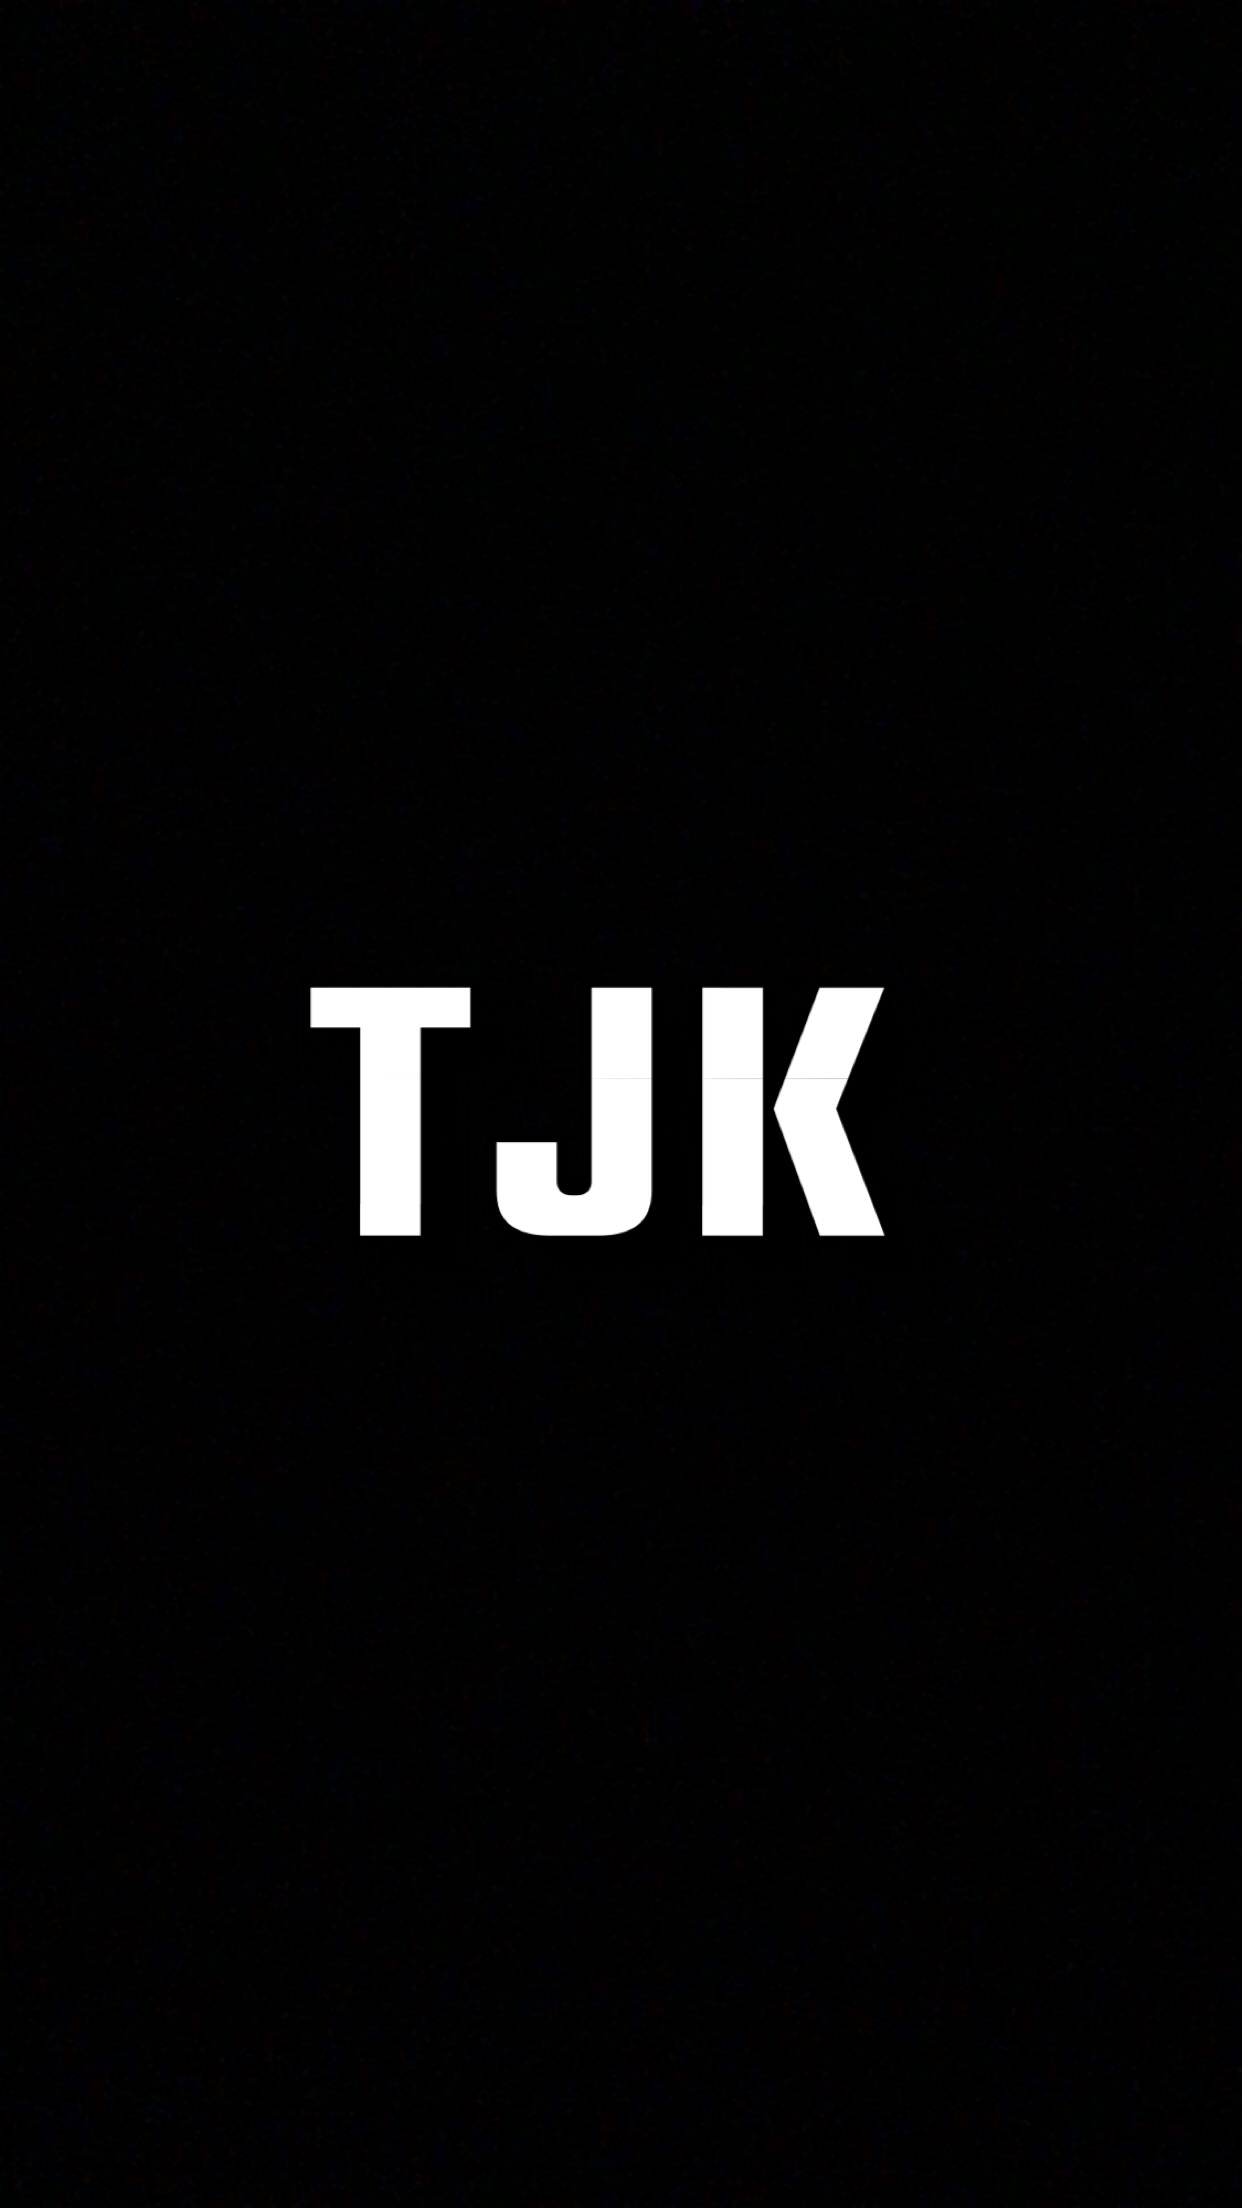 The TJK